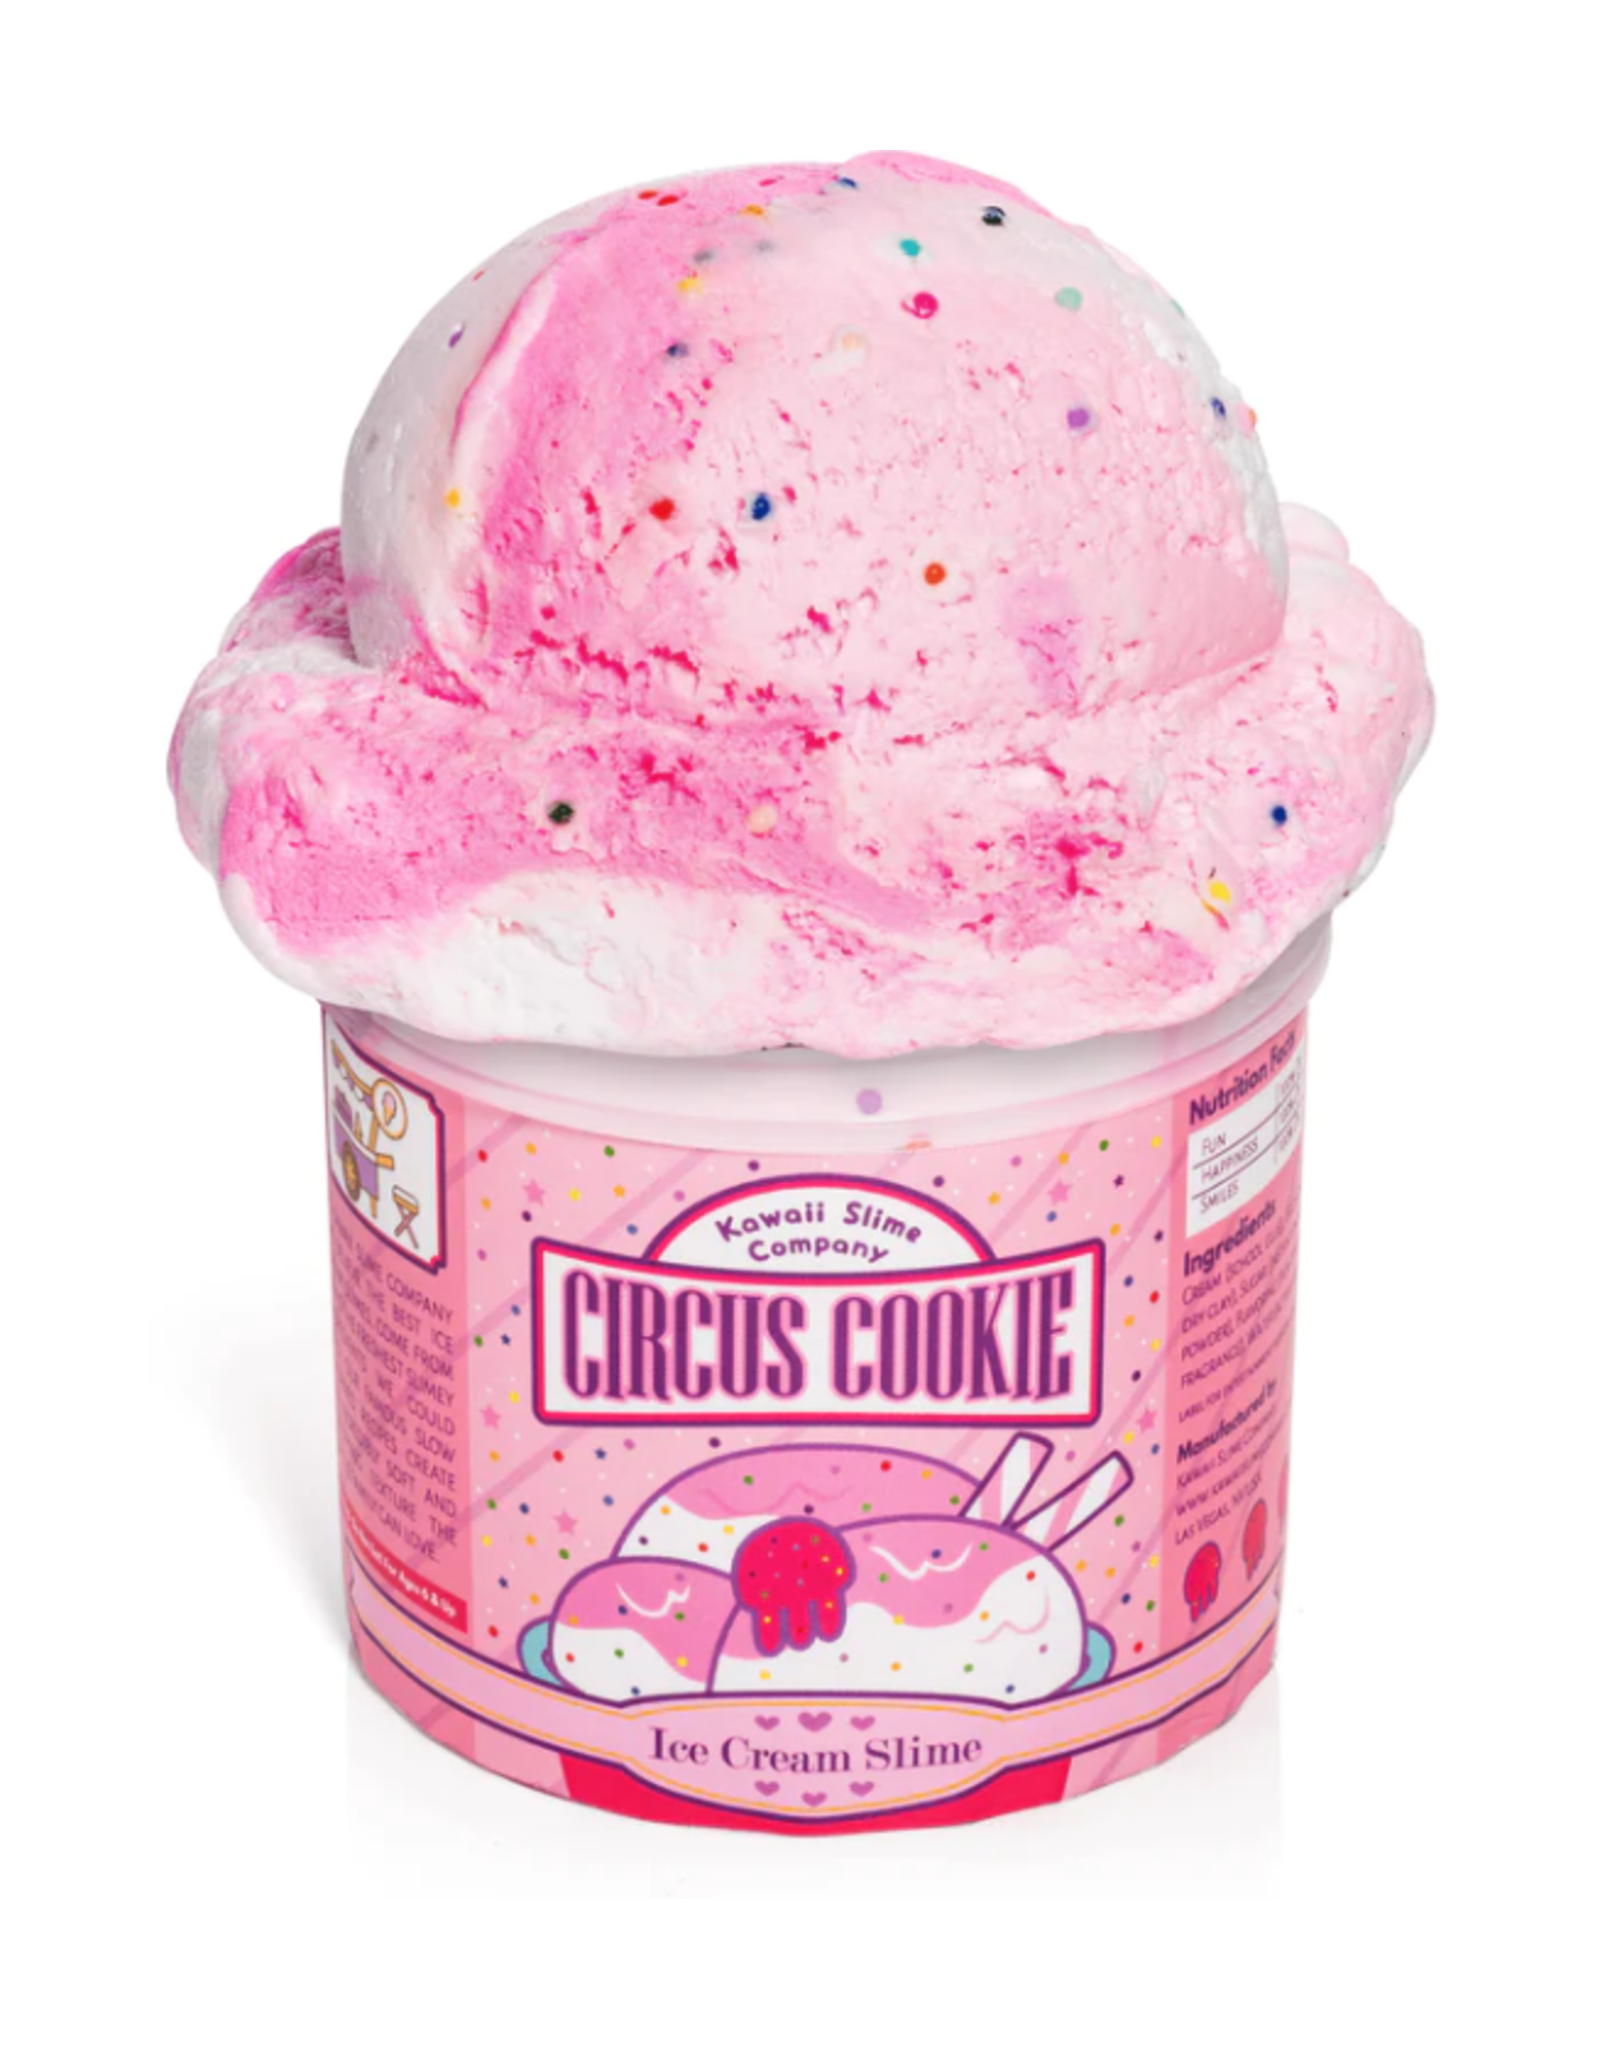 Kawaii Slime Circus Cookie Scented Ice Cream Pint Slime